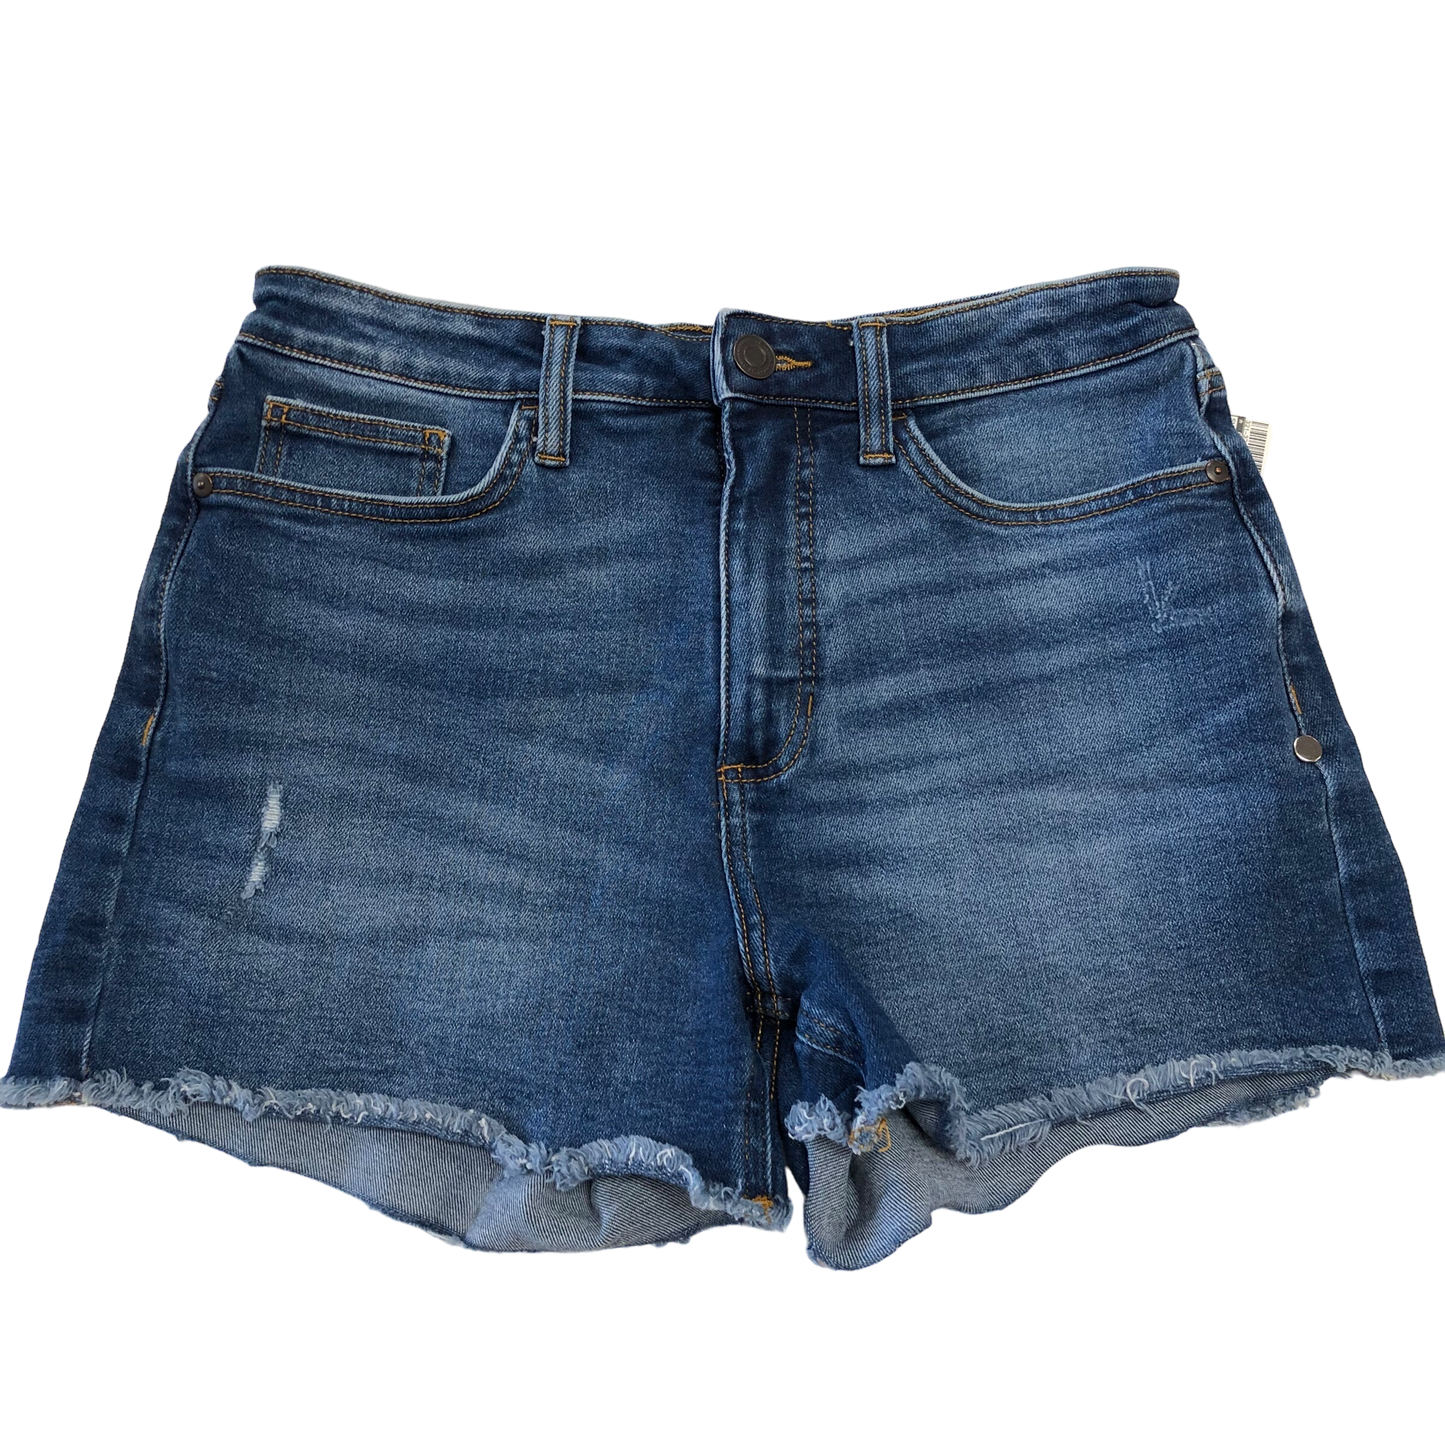 Blue Denim Shorts Cmc, Size 8